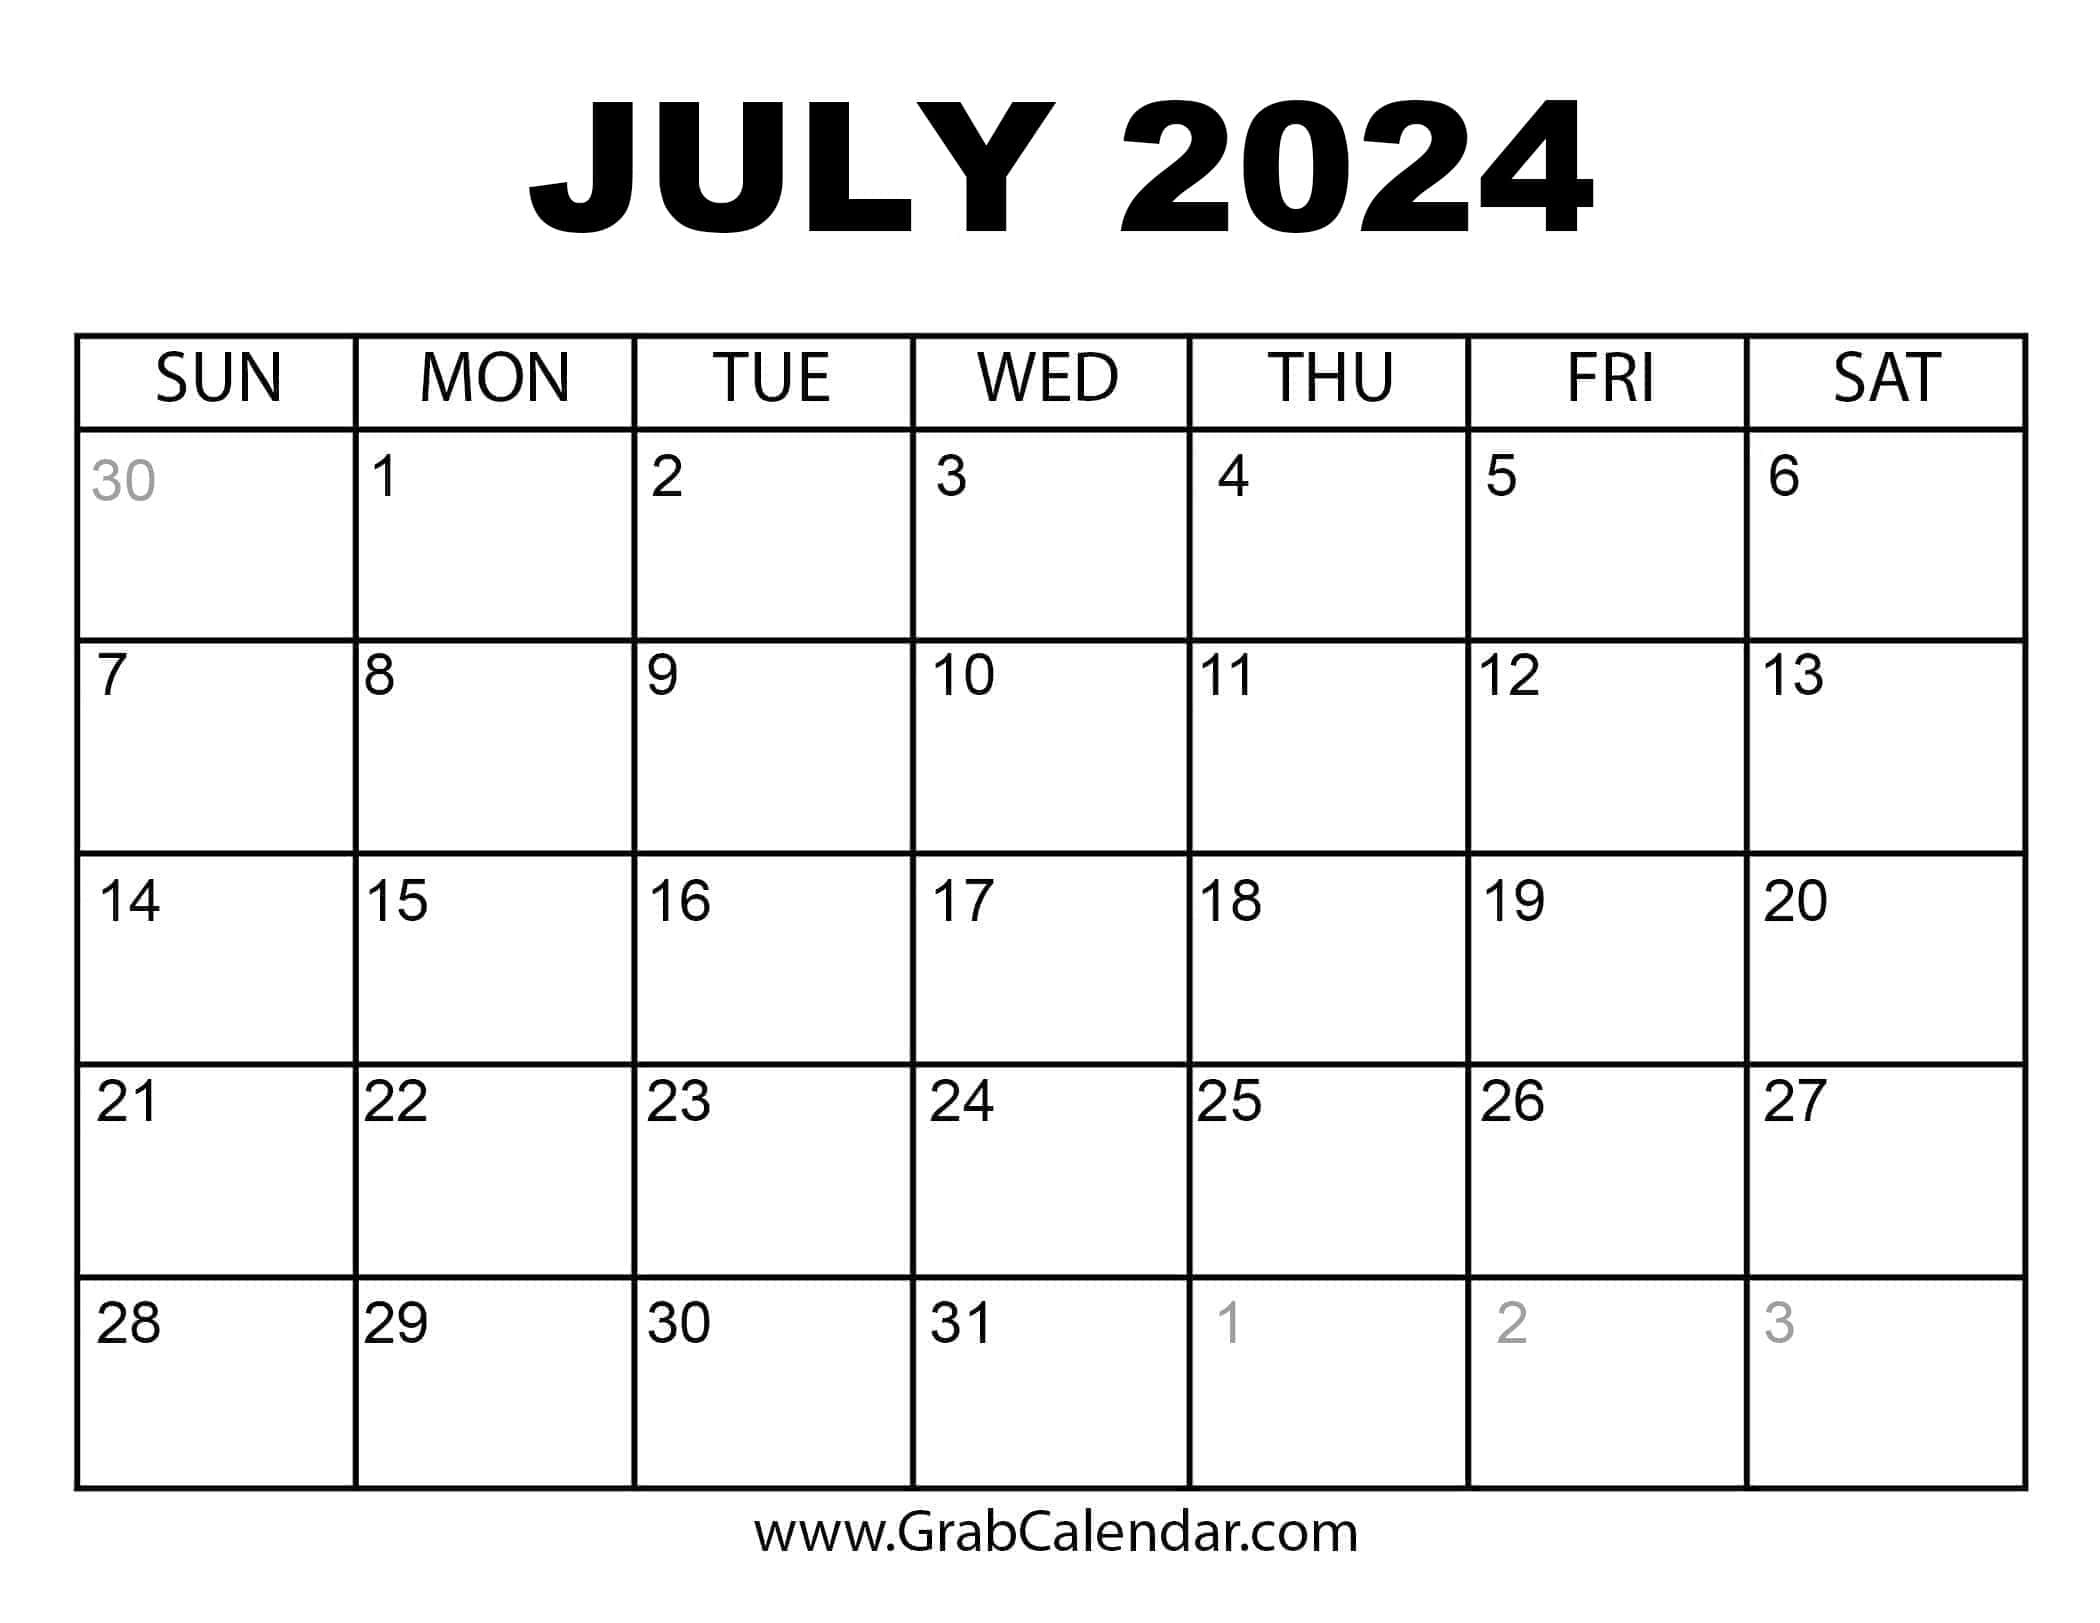 Printable July 2024 Calendar pertaining to Show Me a Calendar of July 2024